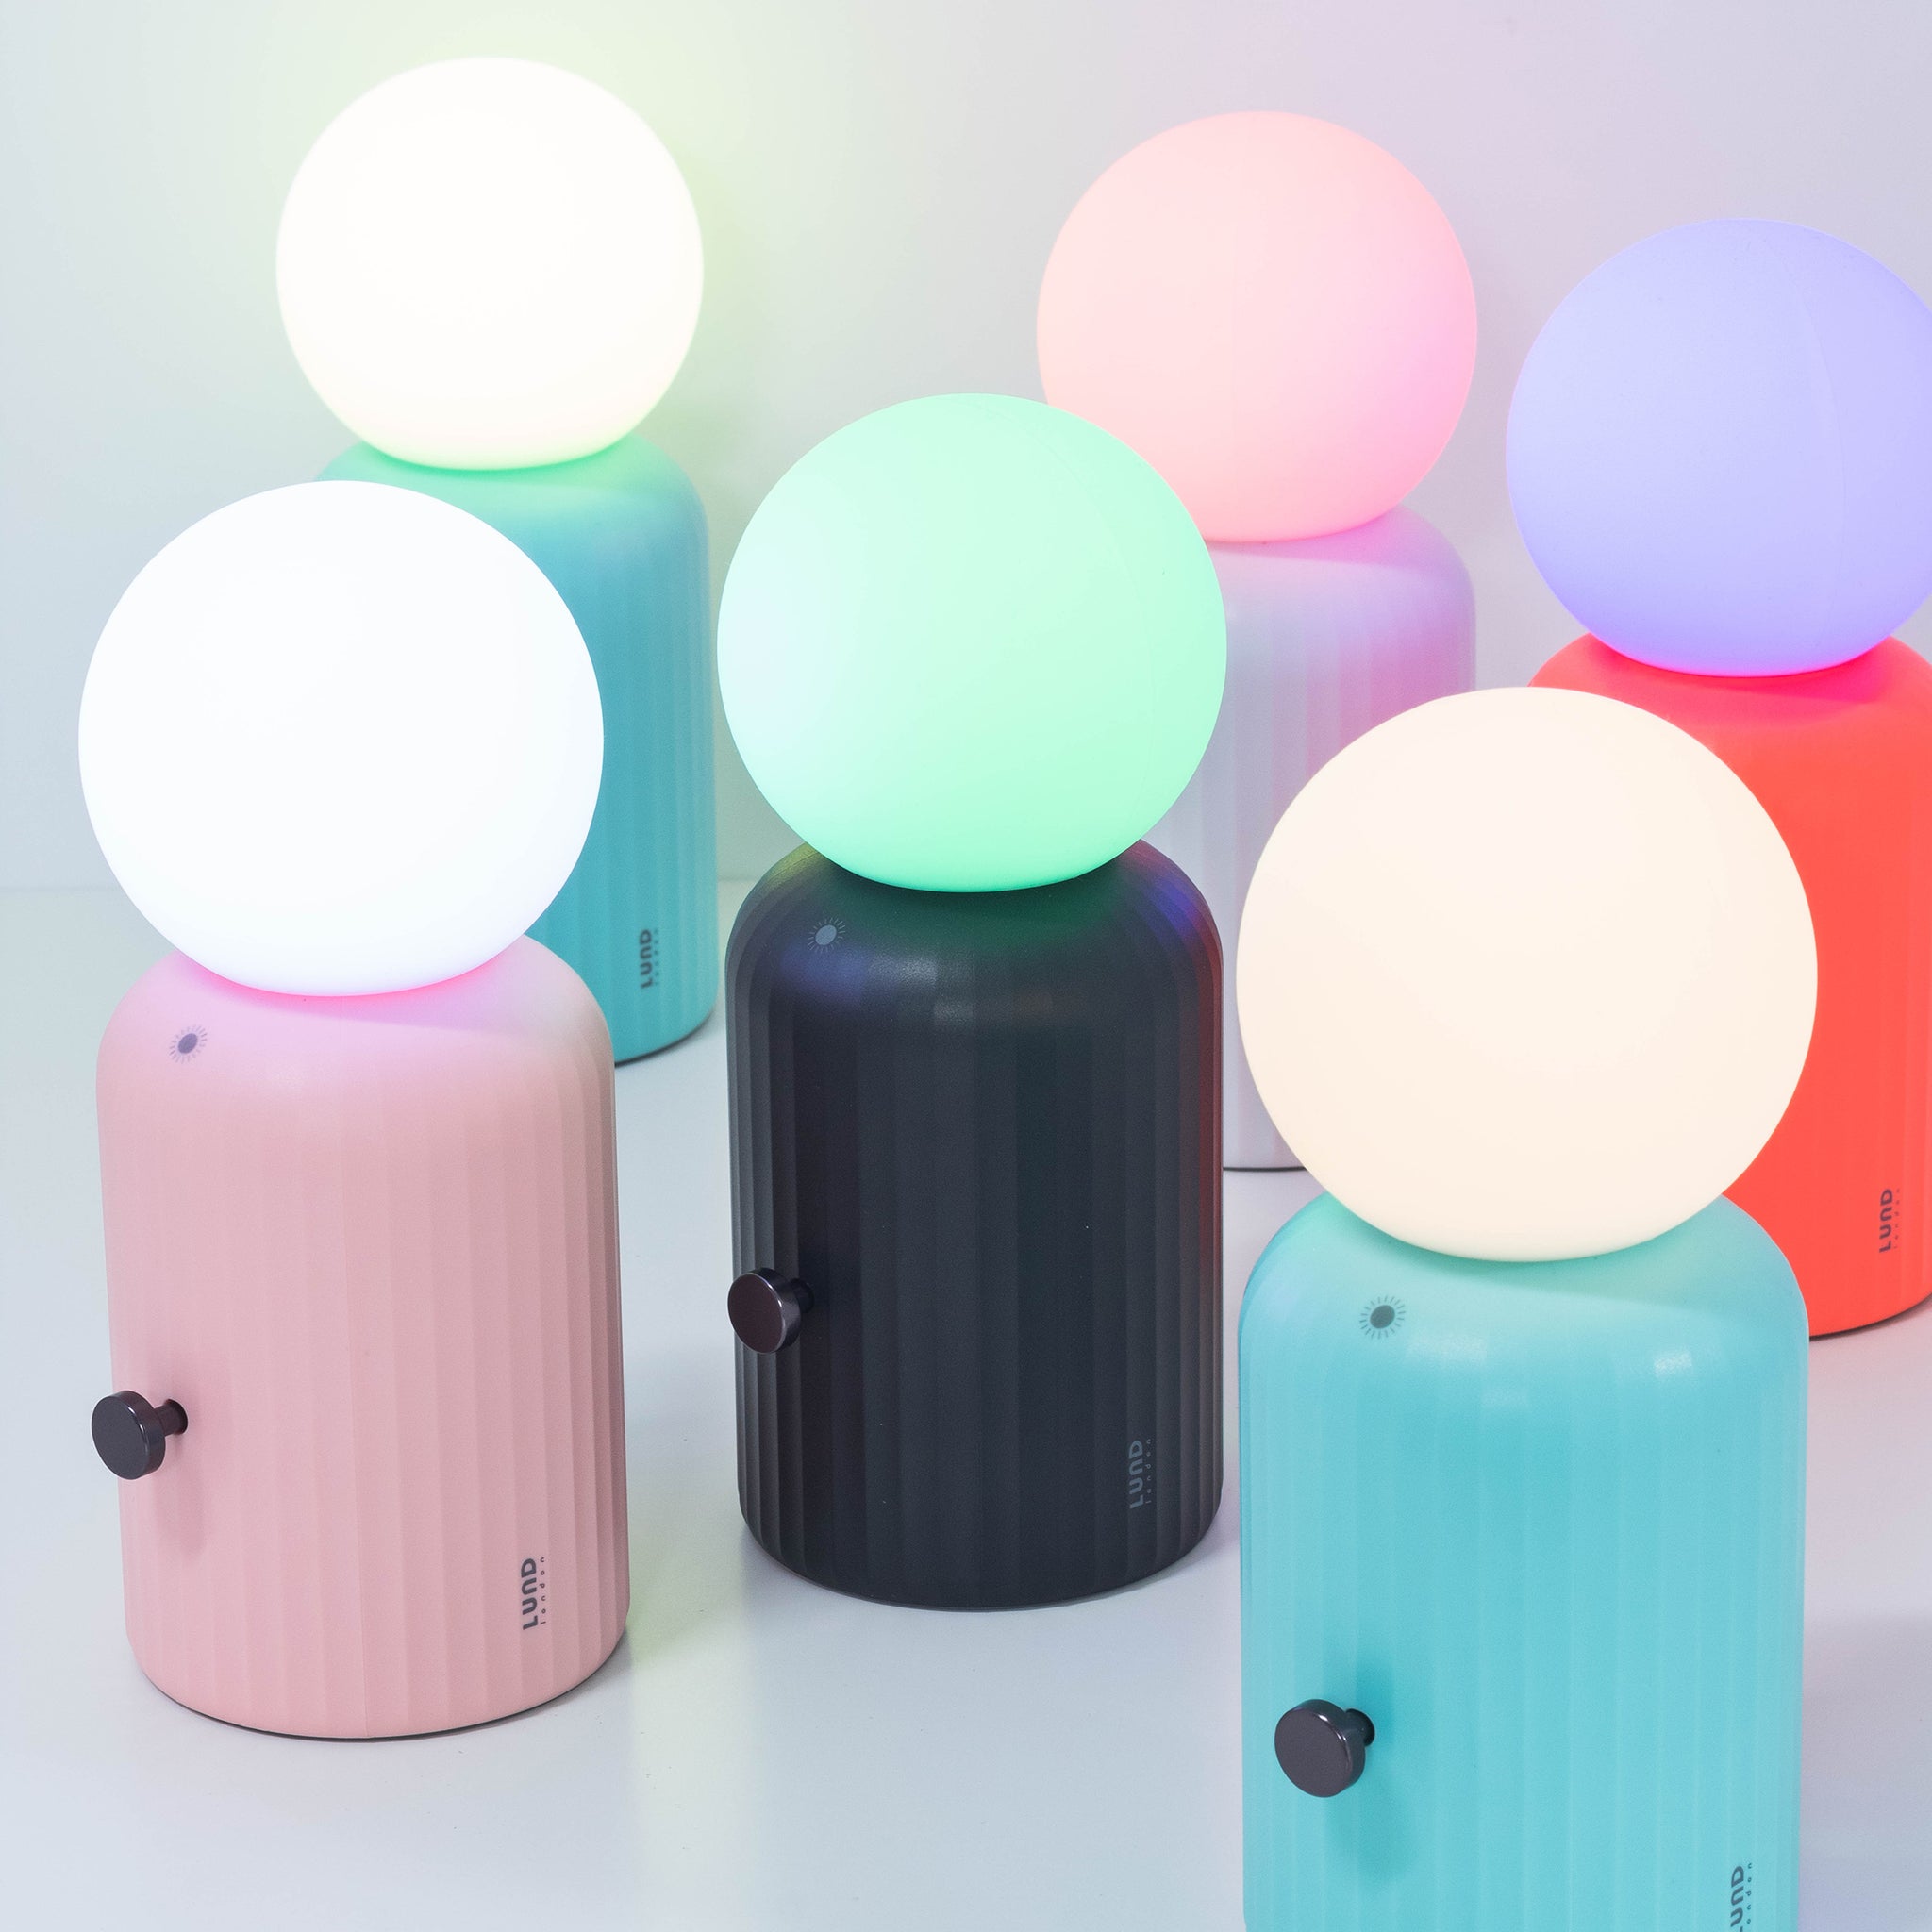 Skittle Oplaadbare Lamp Coral│Lund London│Draadloos│foto groep diverse kleuren lamp en verlichting